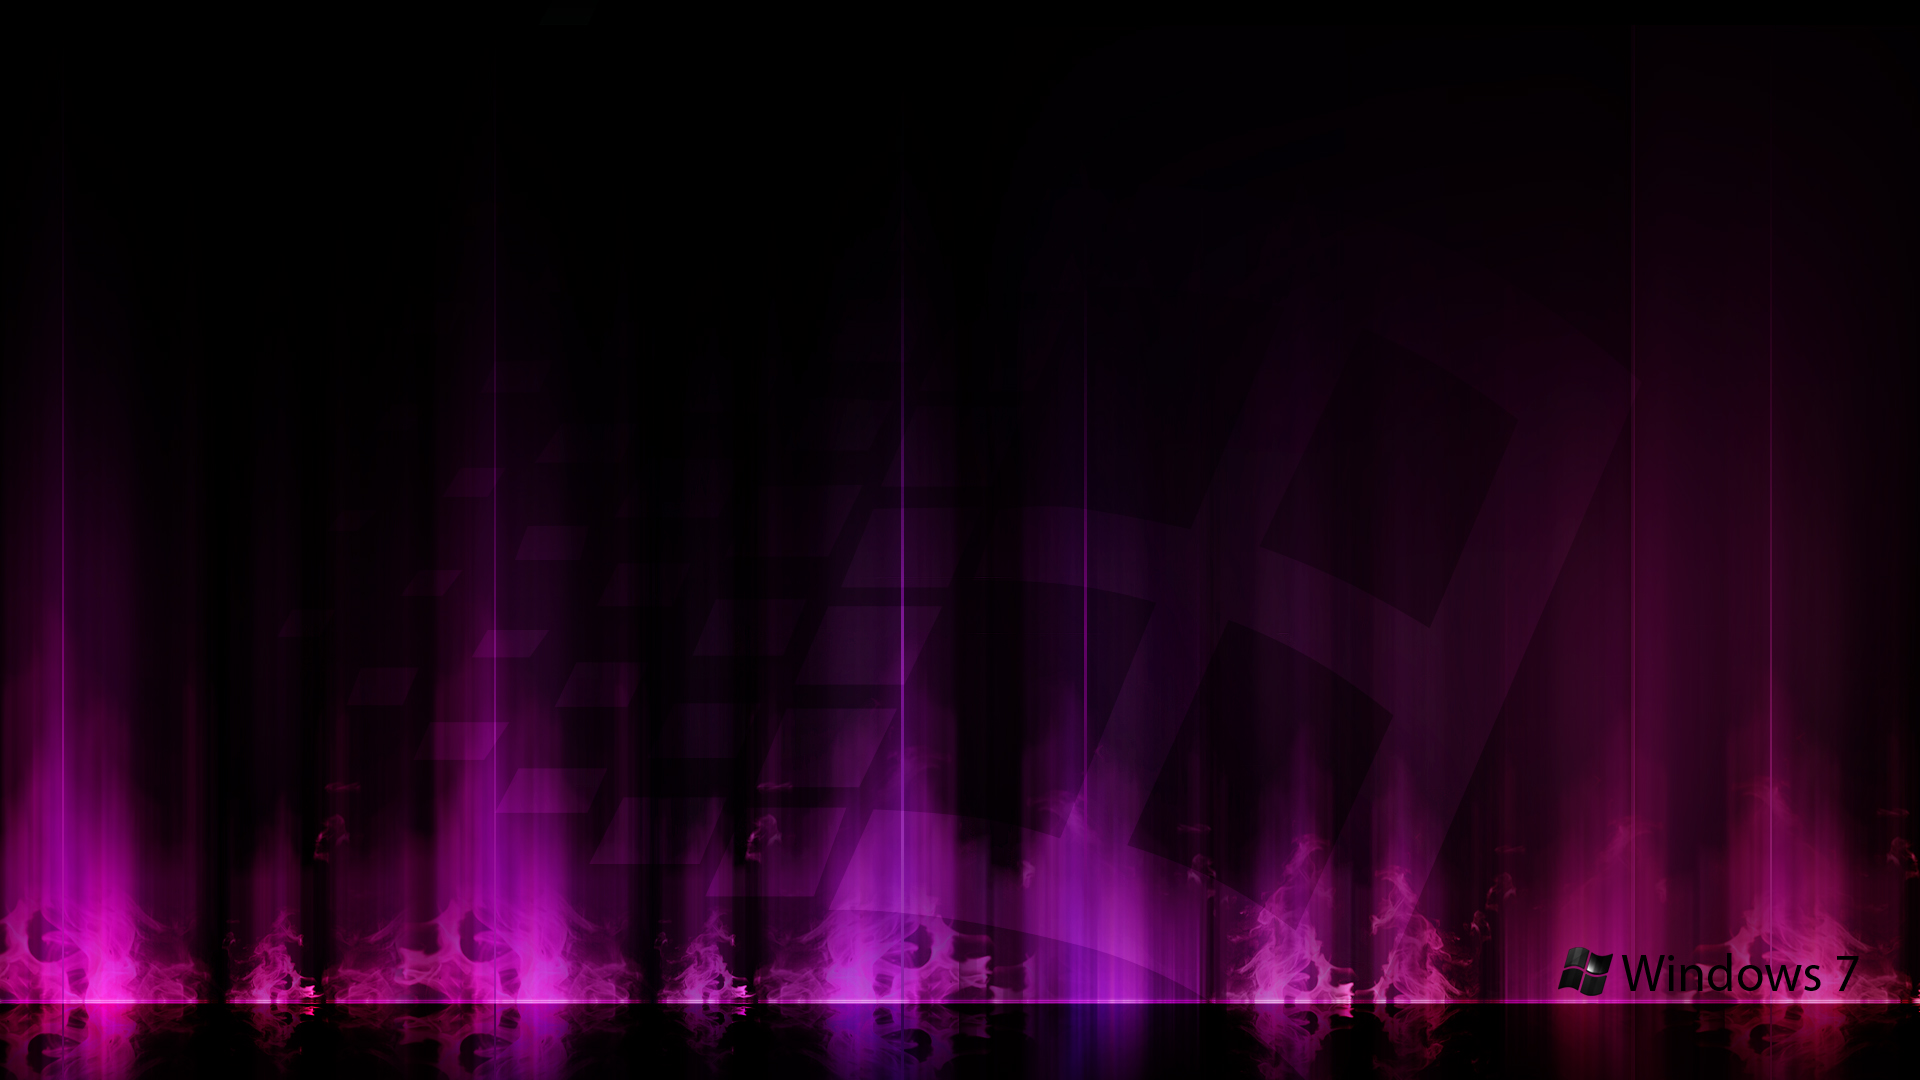 Windows 7 Purple Aurora Wallpapers HD Wallpapers